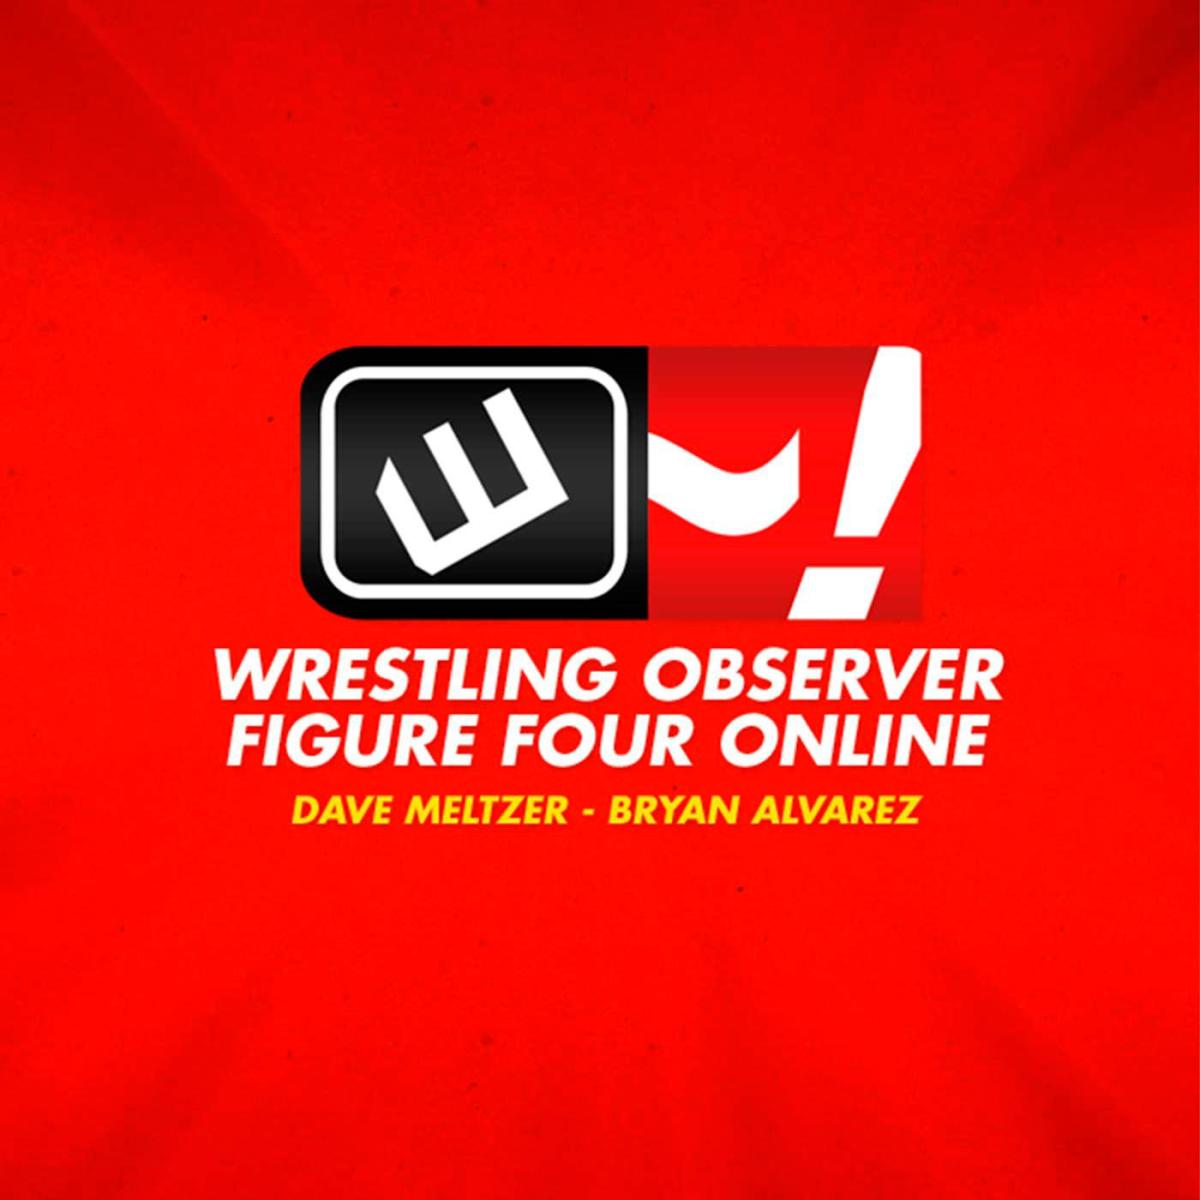 wrestling-observer-figure-four-online-wonf4w-aFmUBdK7Qve.1400x1400